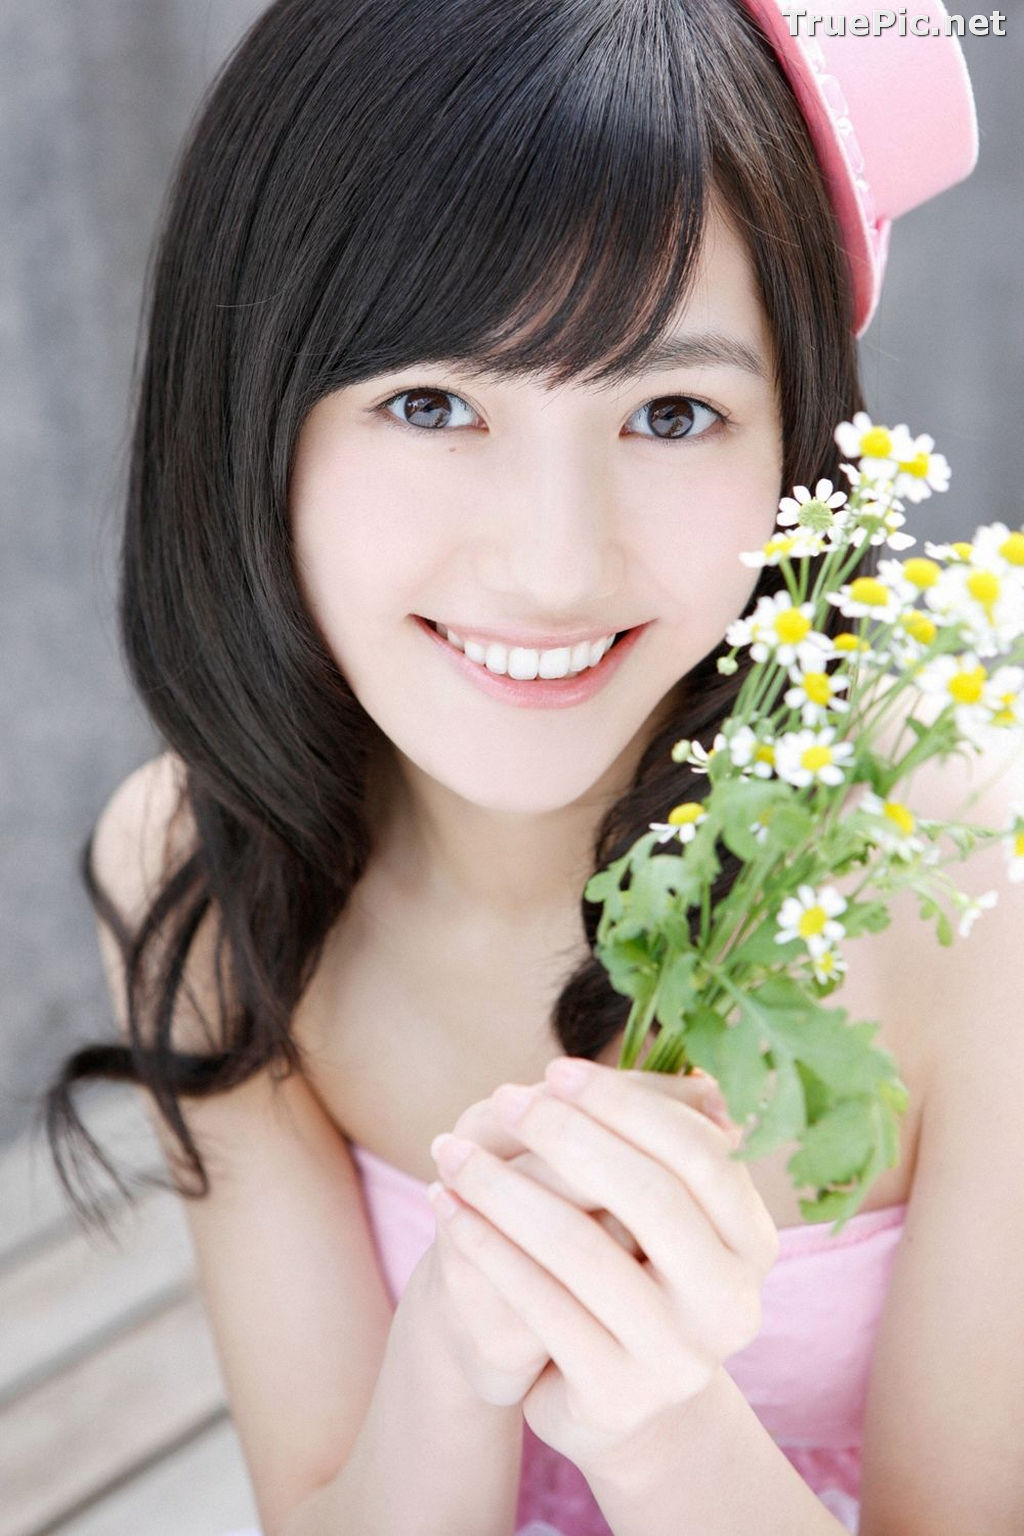 Image [YS Web] Vol.531 - Japanese Idol Girl Group (AKB48) - Mayu Watanabe - TruePic.net - Picture-44